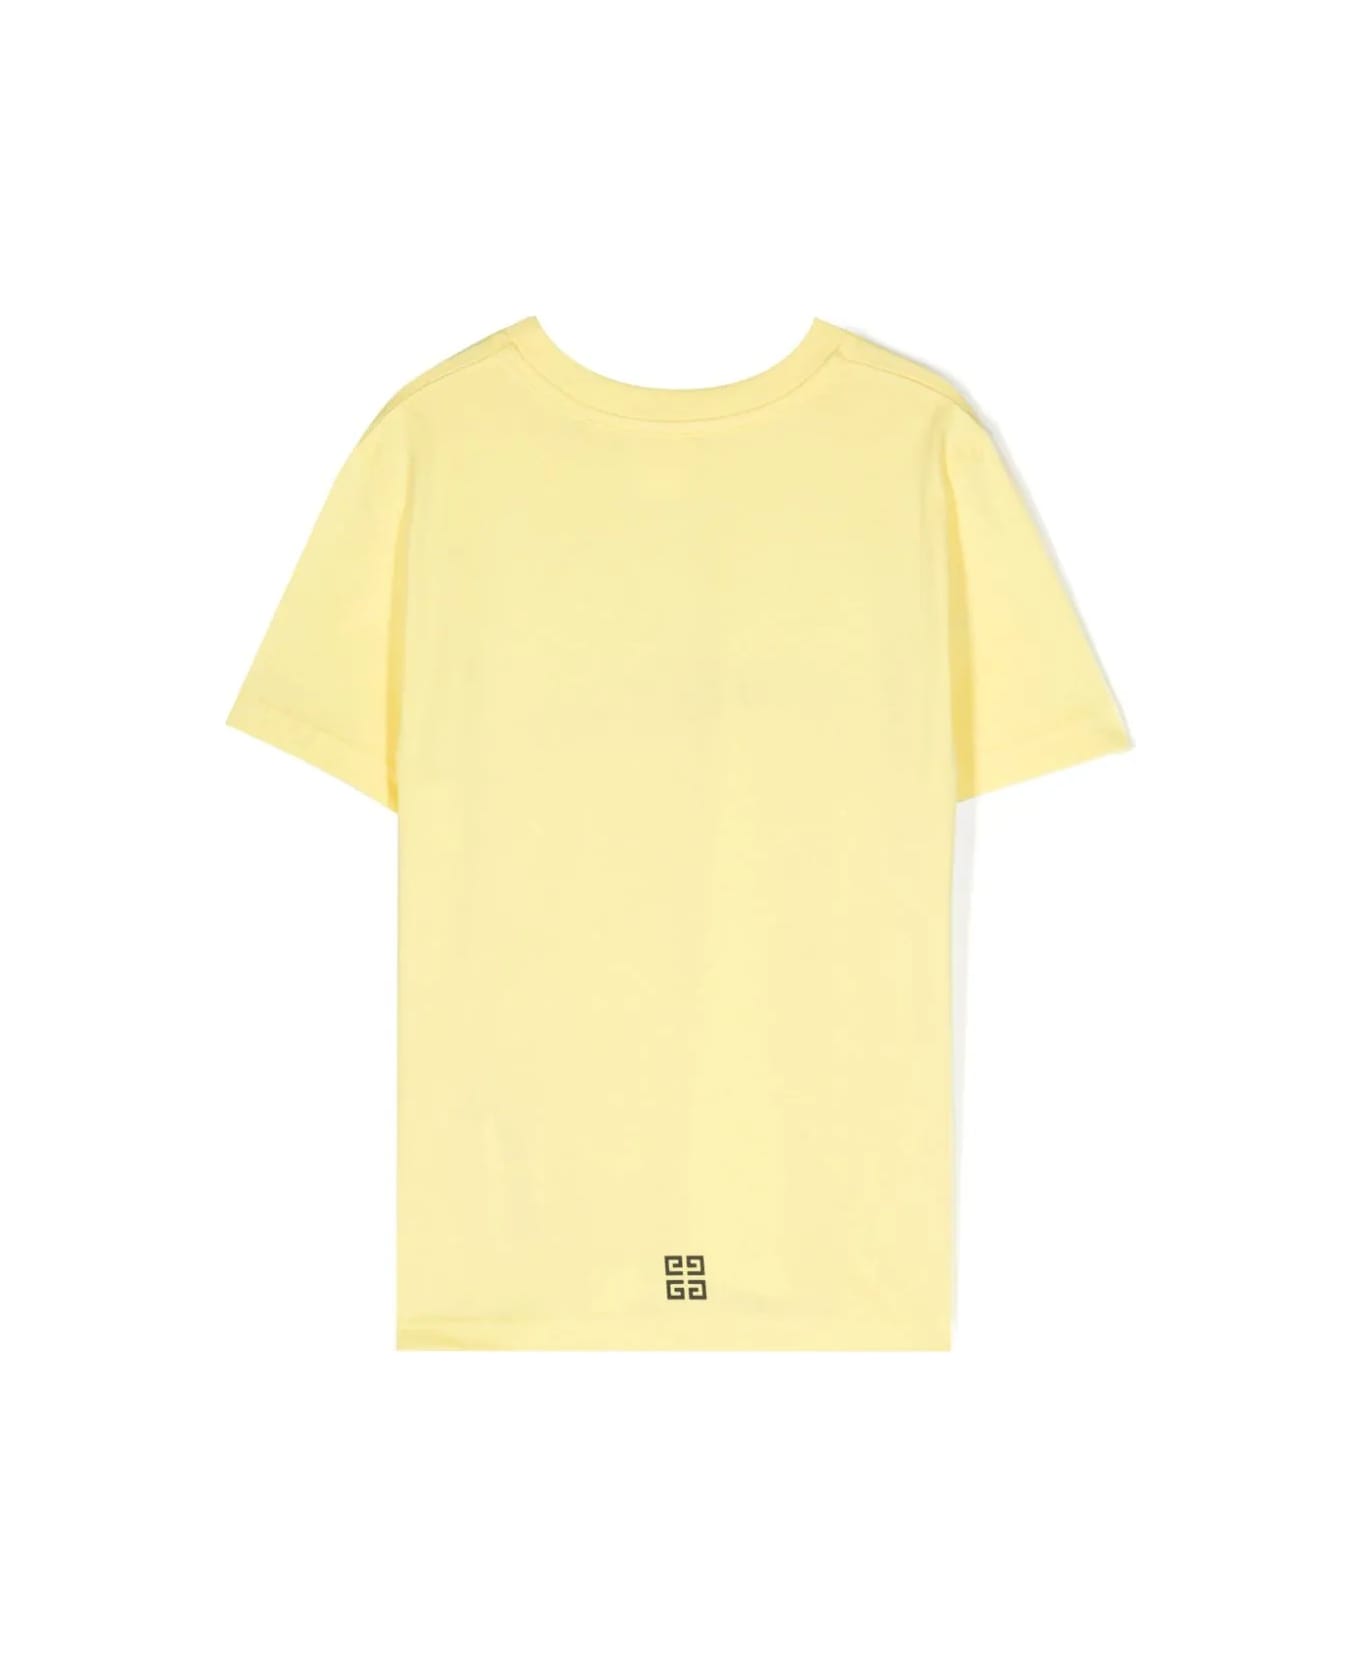 Givenchy T-shirt Con Logo - Yellow